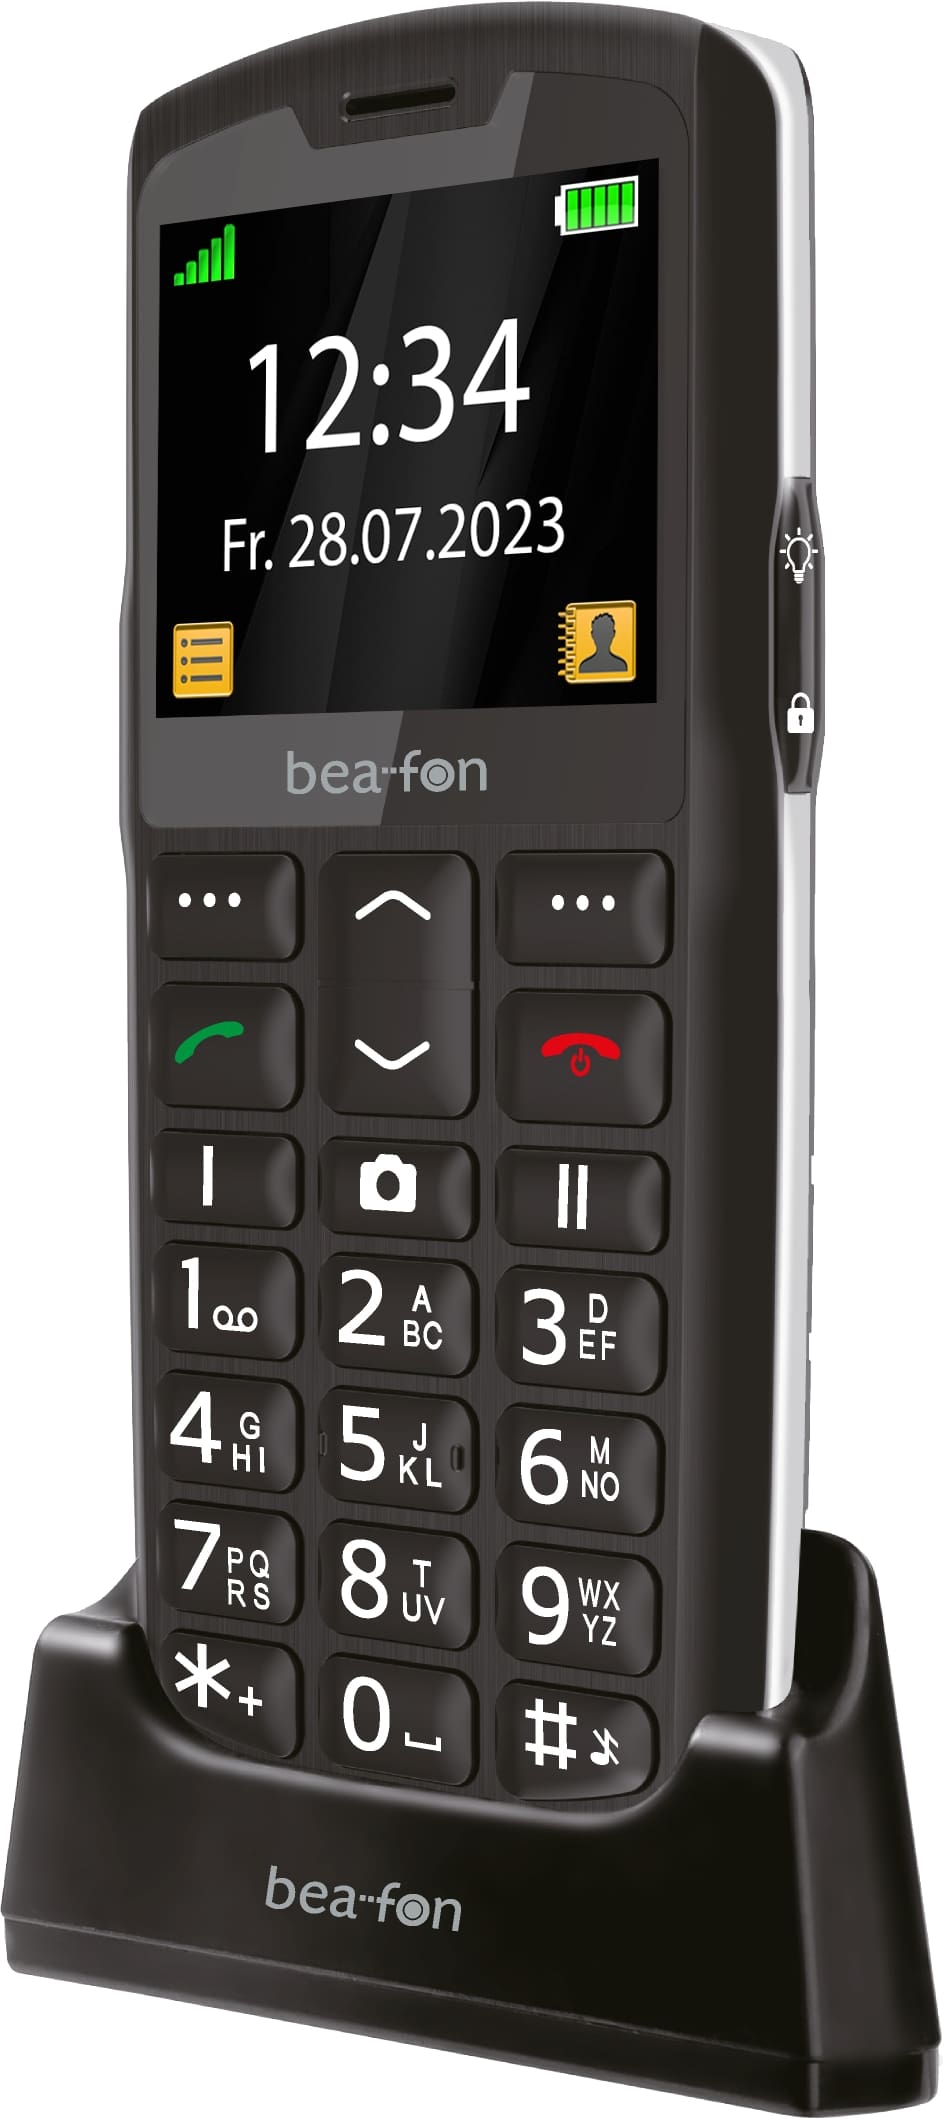 BEAFON Handy SL260 schwarz-silber